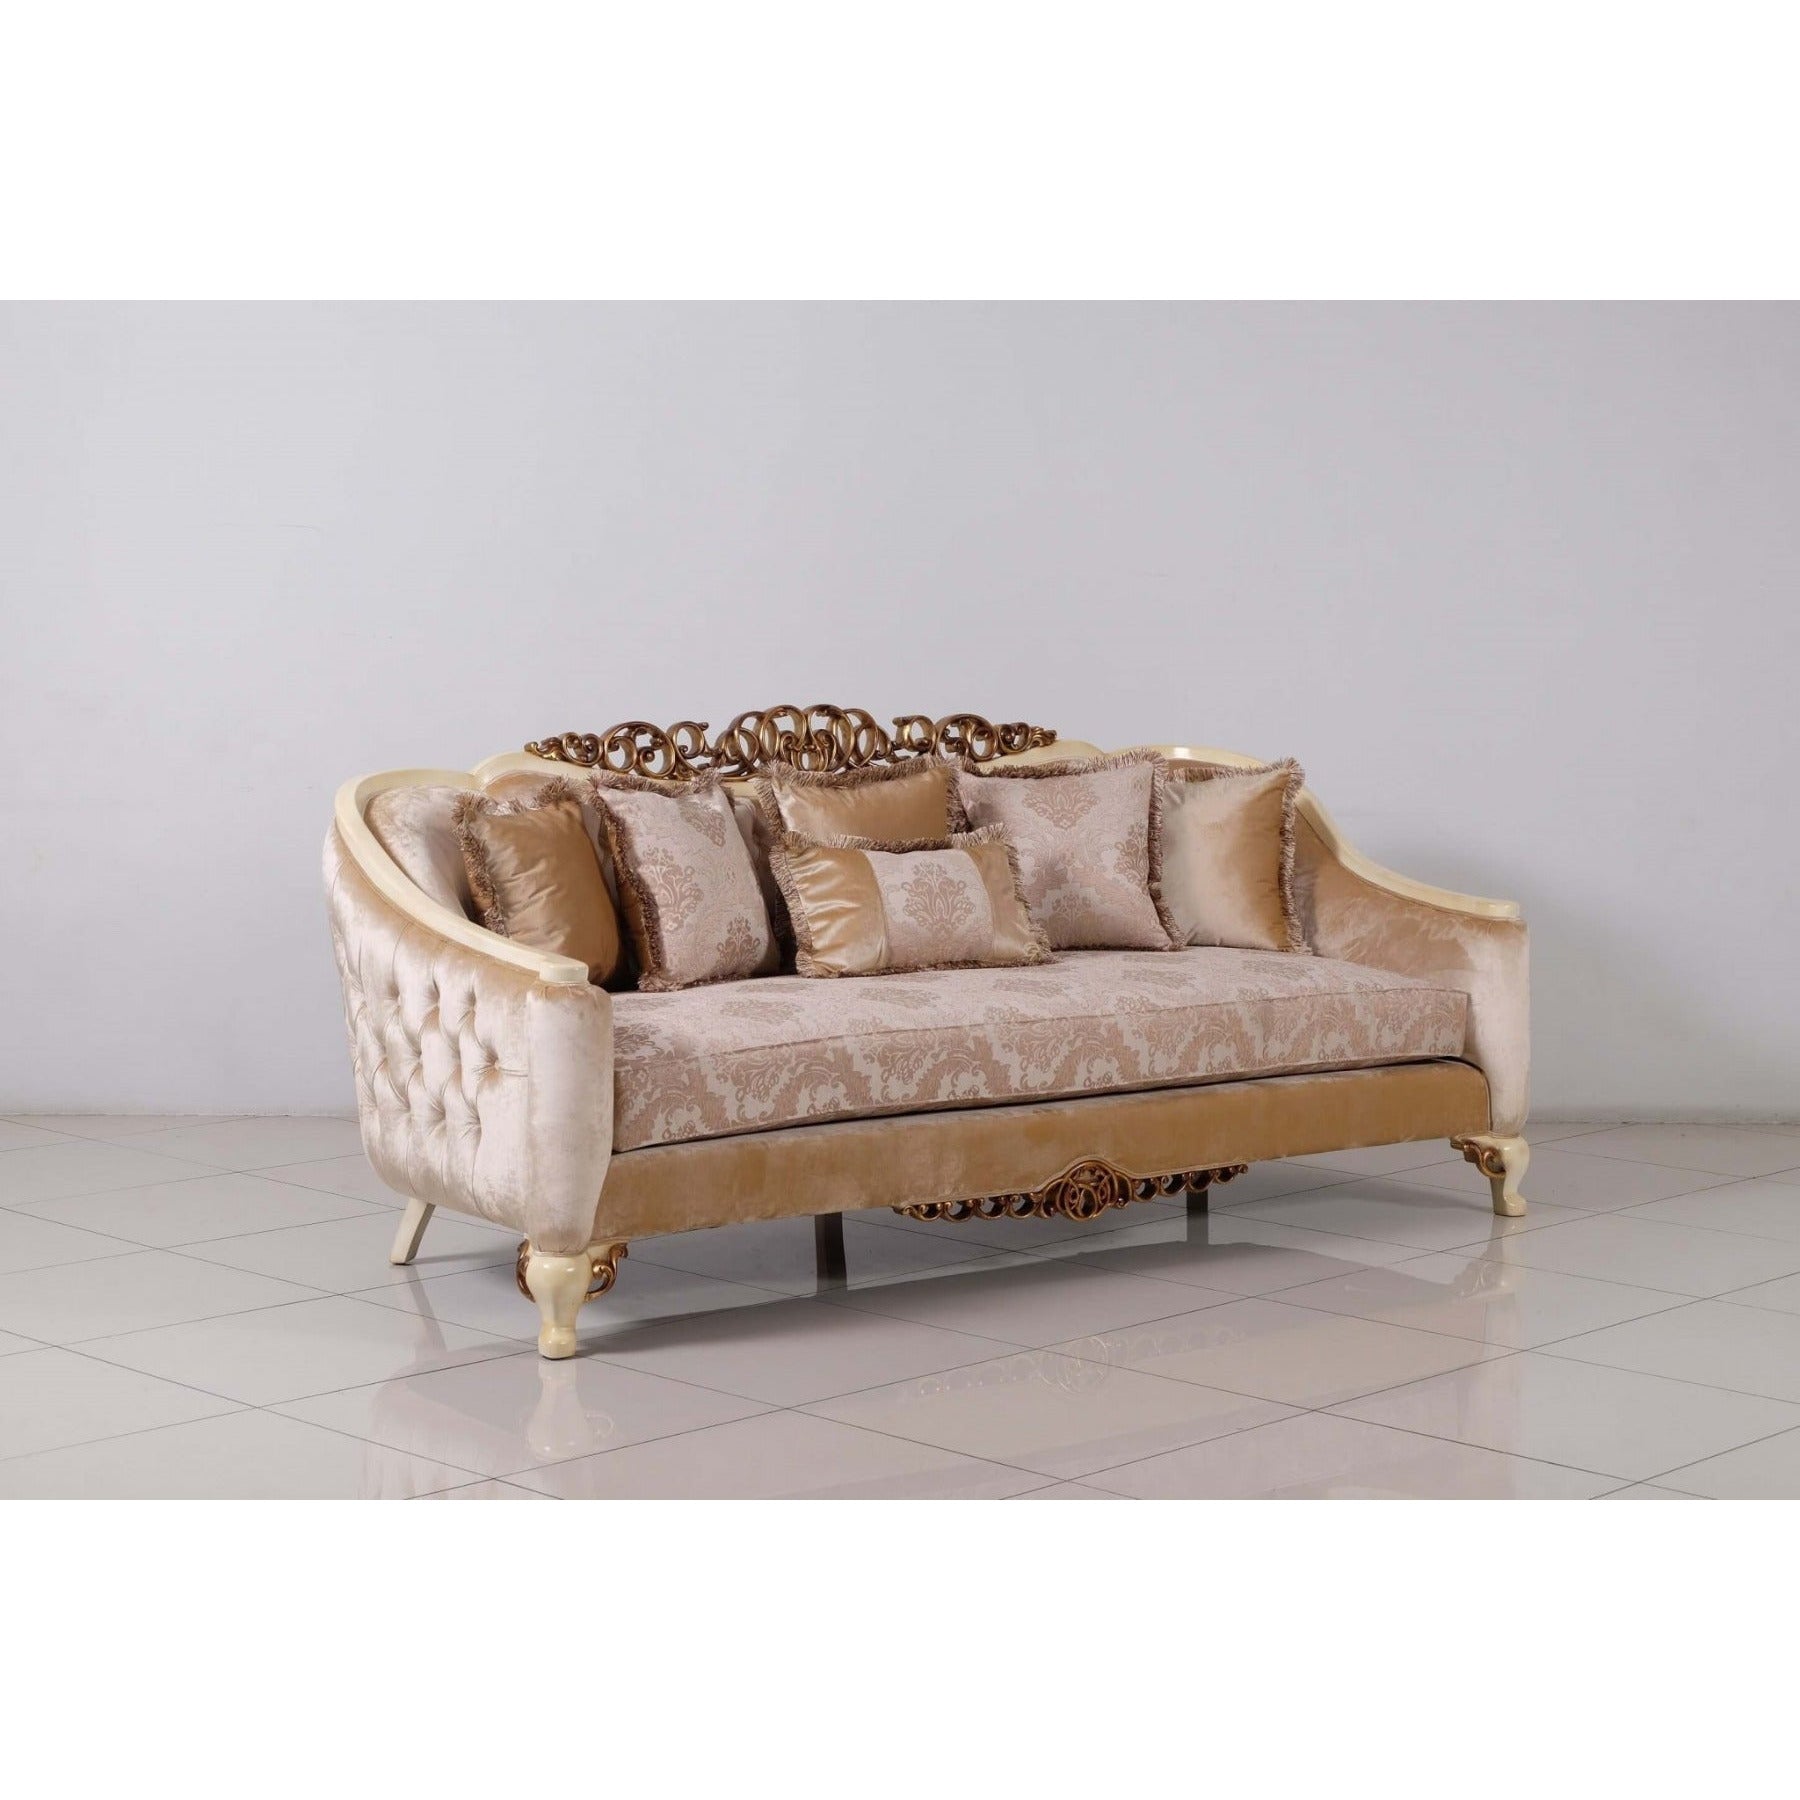 European Furniture - Angelica 2 Piece Living Room Set in Beige & Gold - 45350-2SET - New Star Living